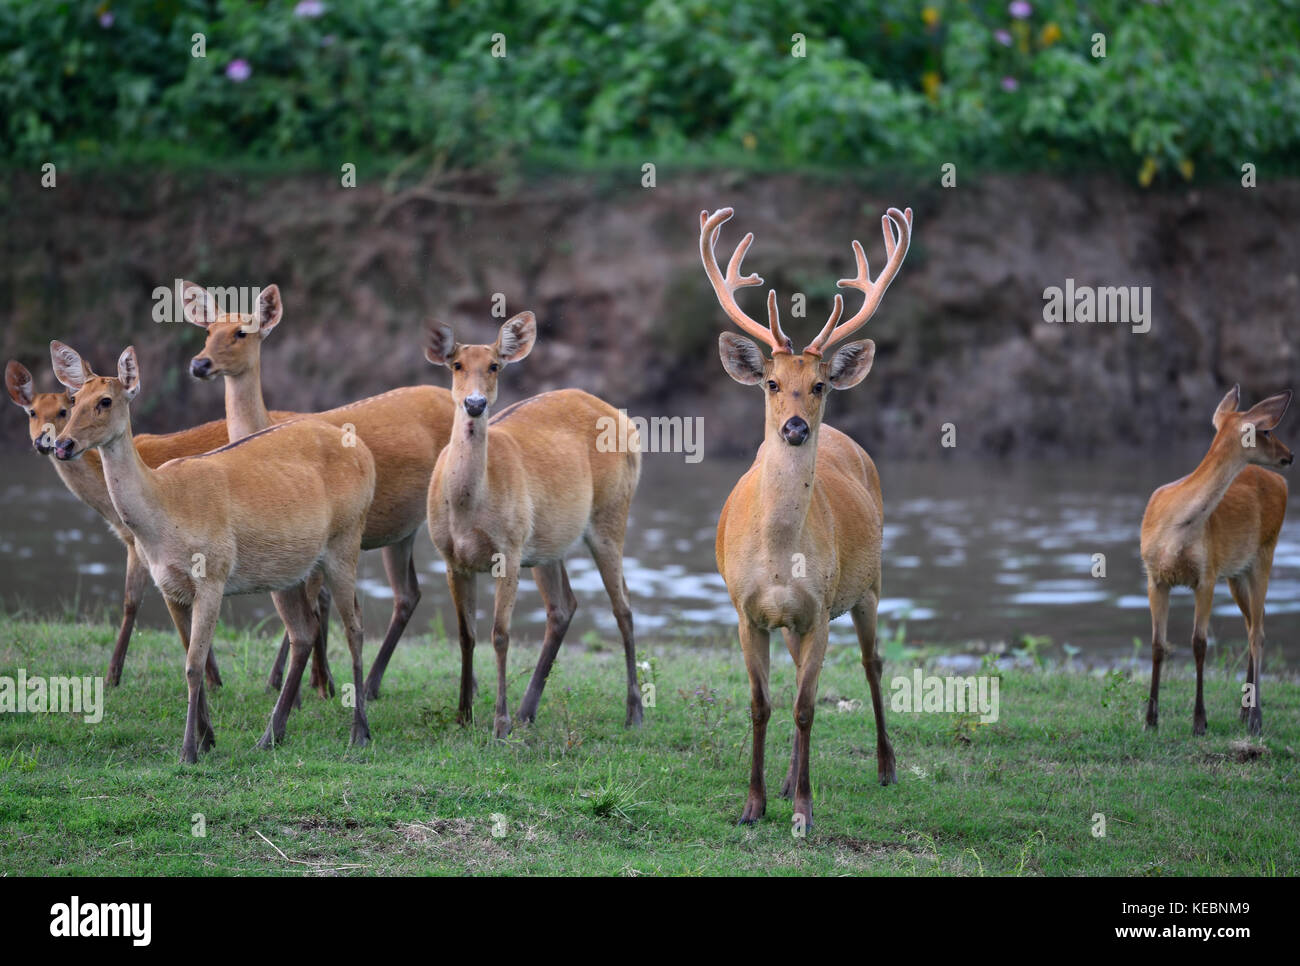 Eastern swamp deer or Barasingha at Kaziranga National Park, Assam India Stock Photo